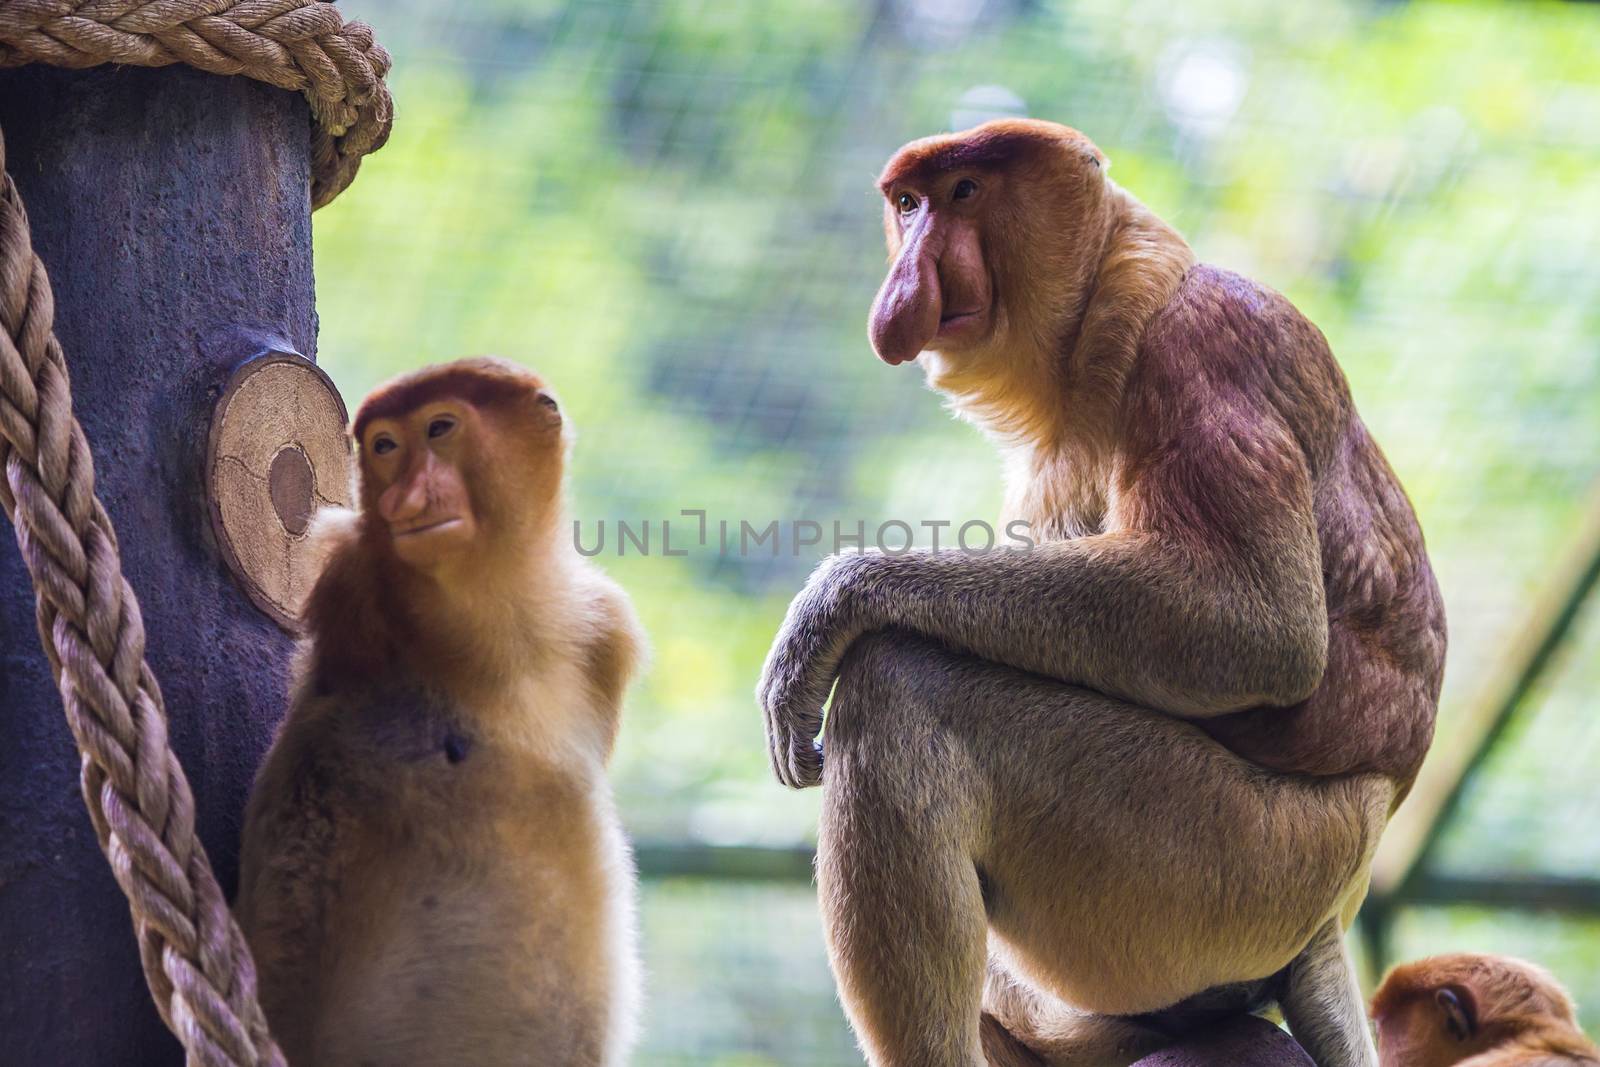 Proboscis monkey in the zoo garden. by truphoto